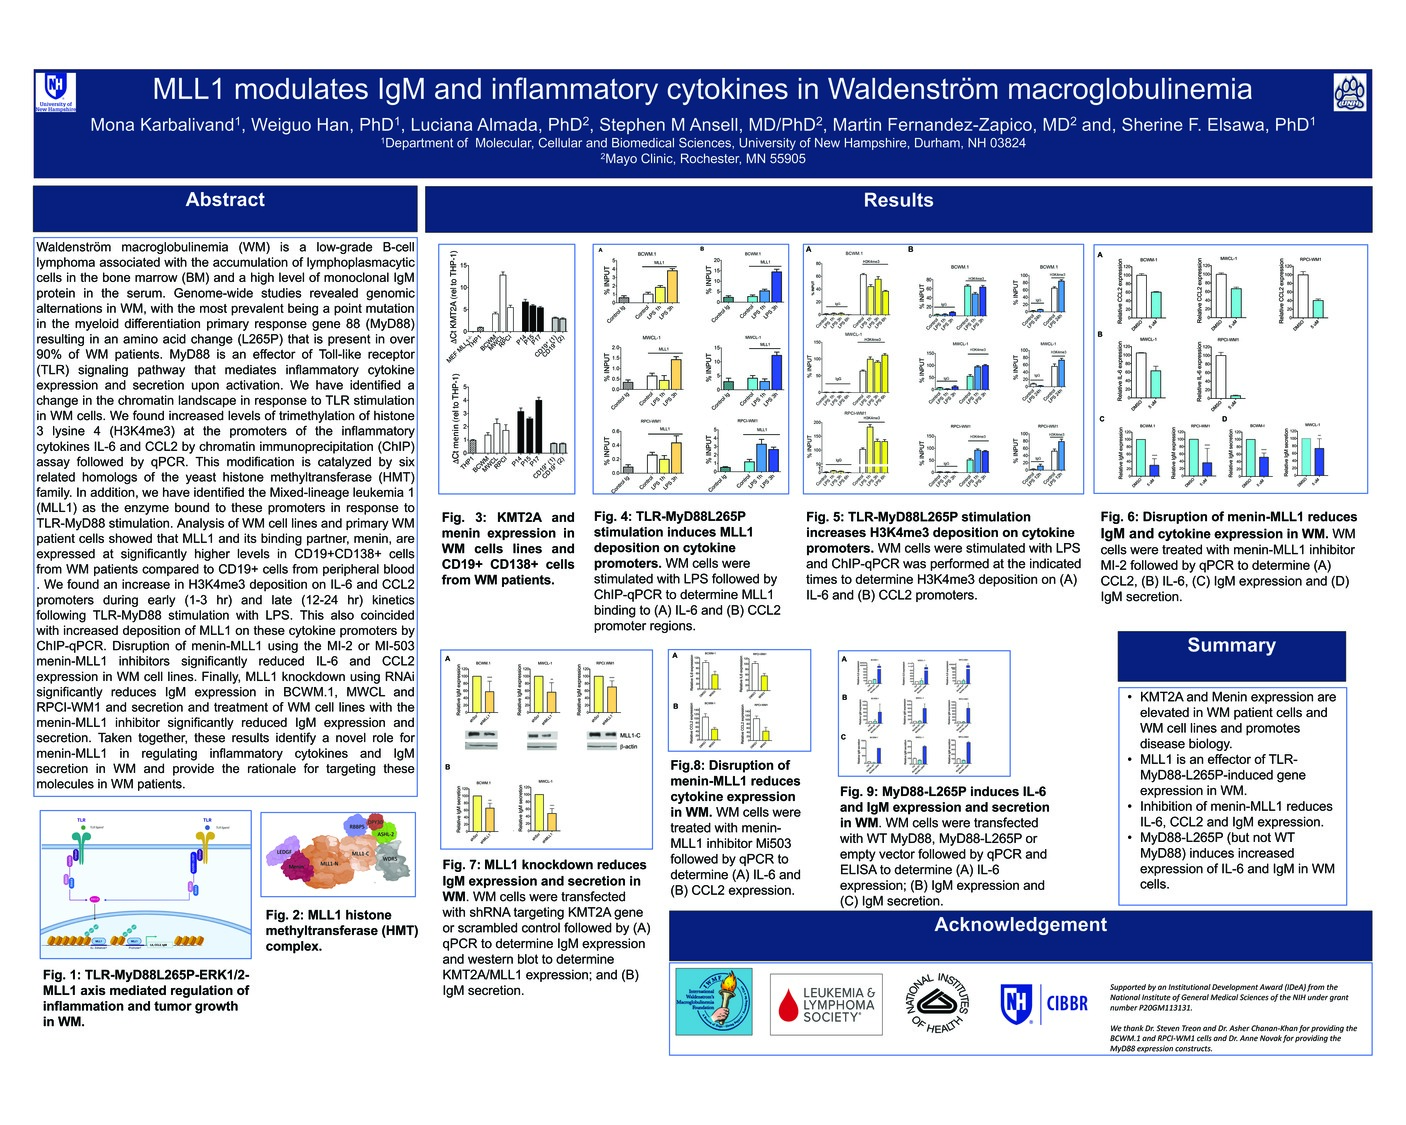 Mll1 Modulates Igm And Inflammatory Cytokines In Waldenström Macroglobulinemia by mk1158